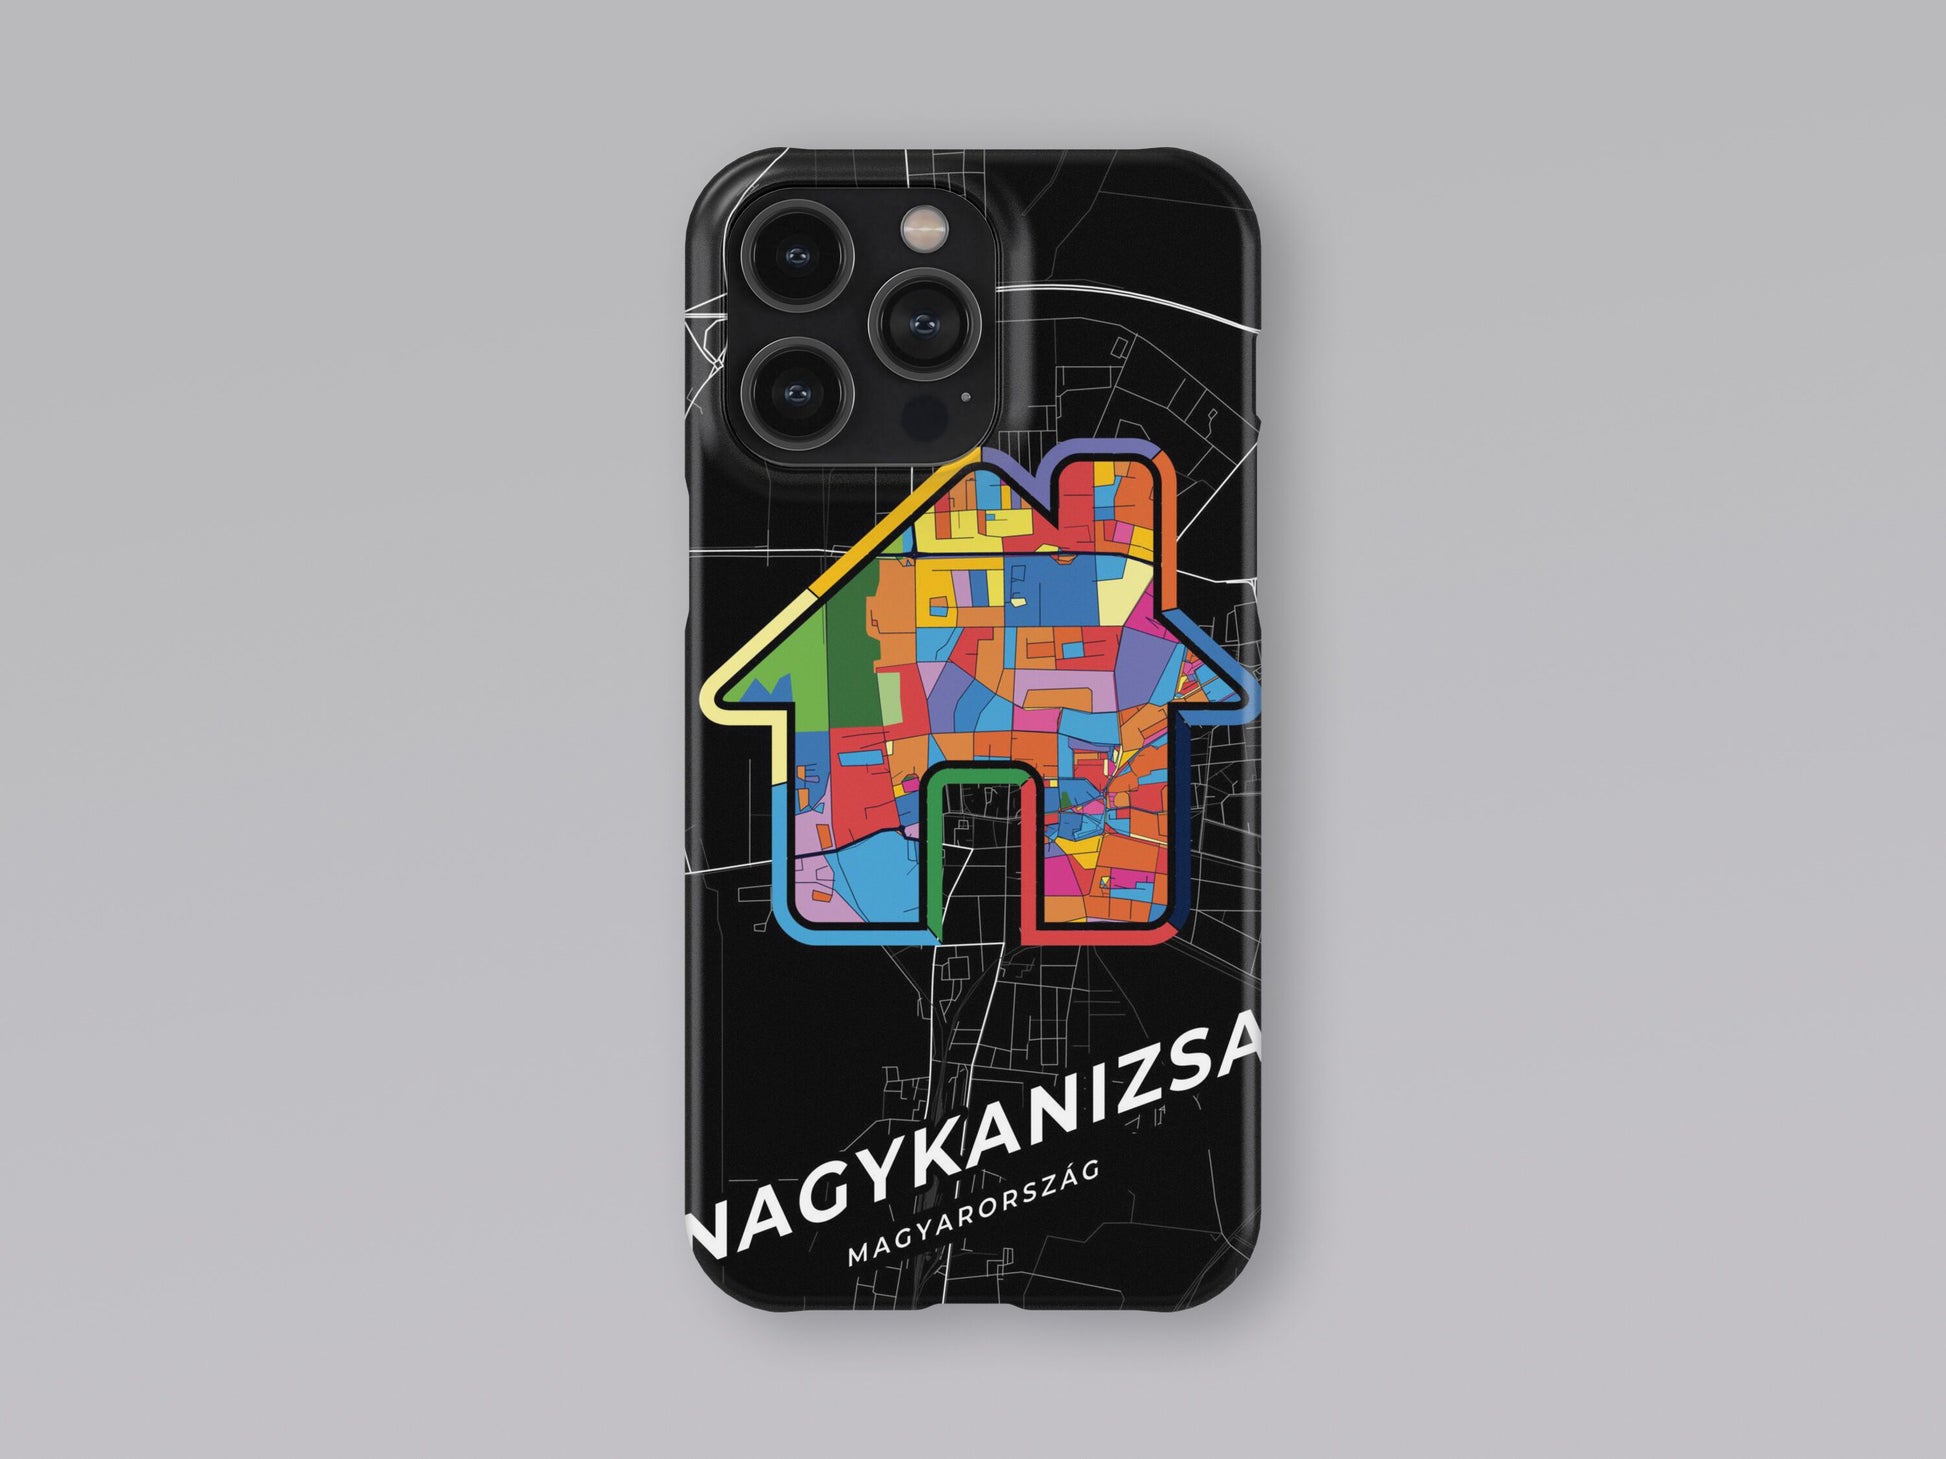 Nagykanizsa Hungary slim phone case with colorful icon. Birthday, wedding or housewarming gift. Couple match cases. 3